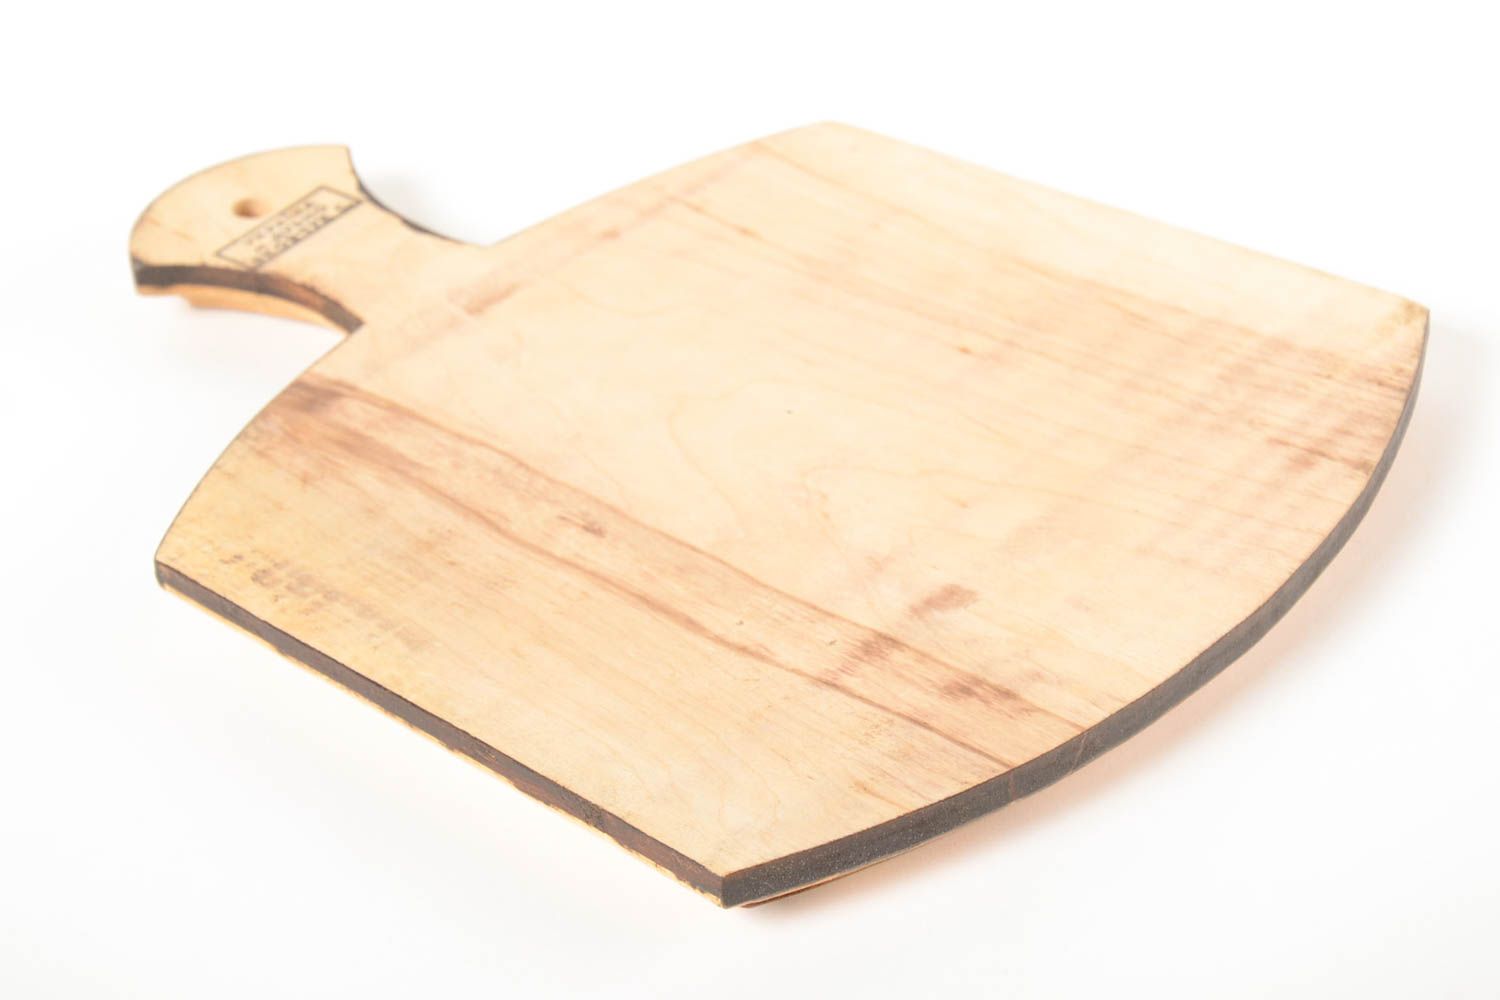 Handmade cutting board wooden cutting board kitchen decor kitchen supplies photo 4